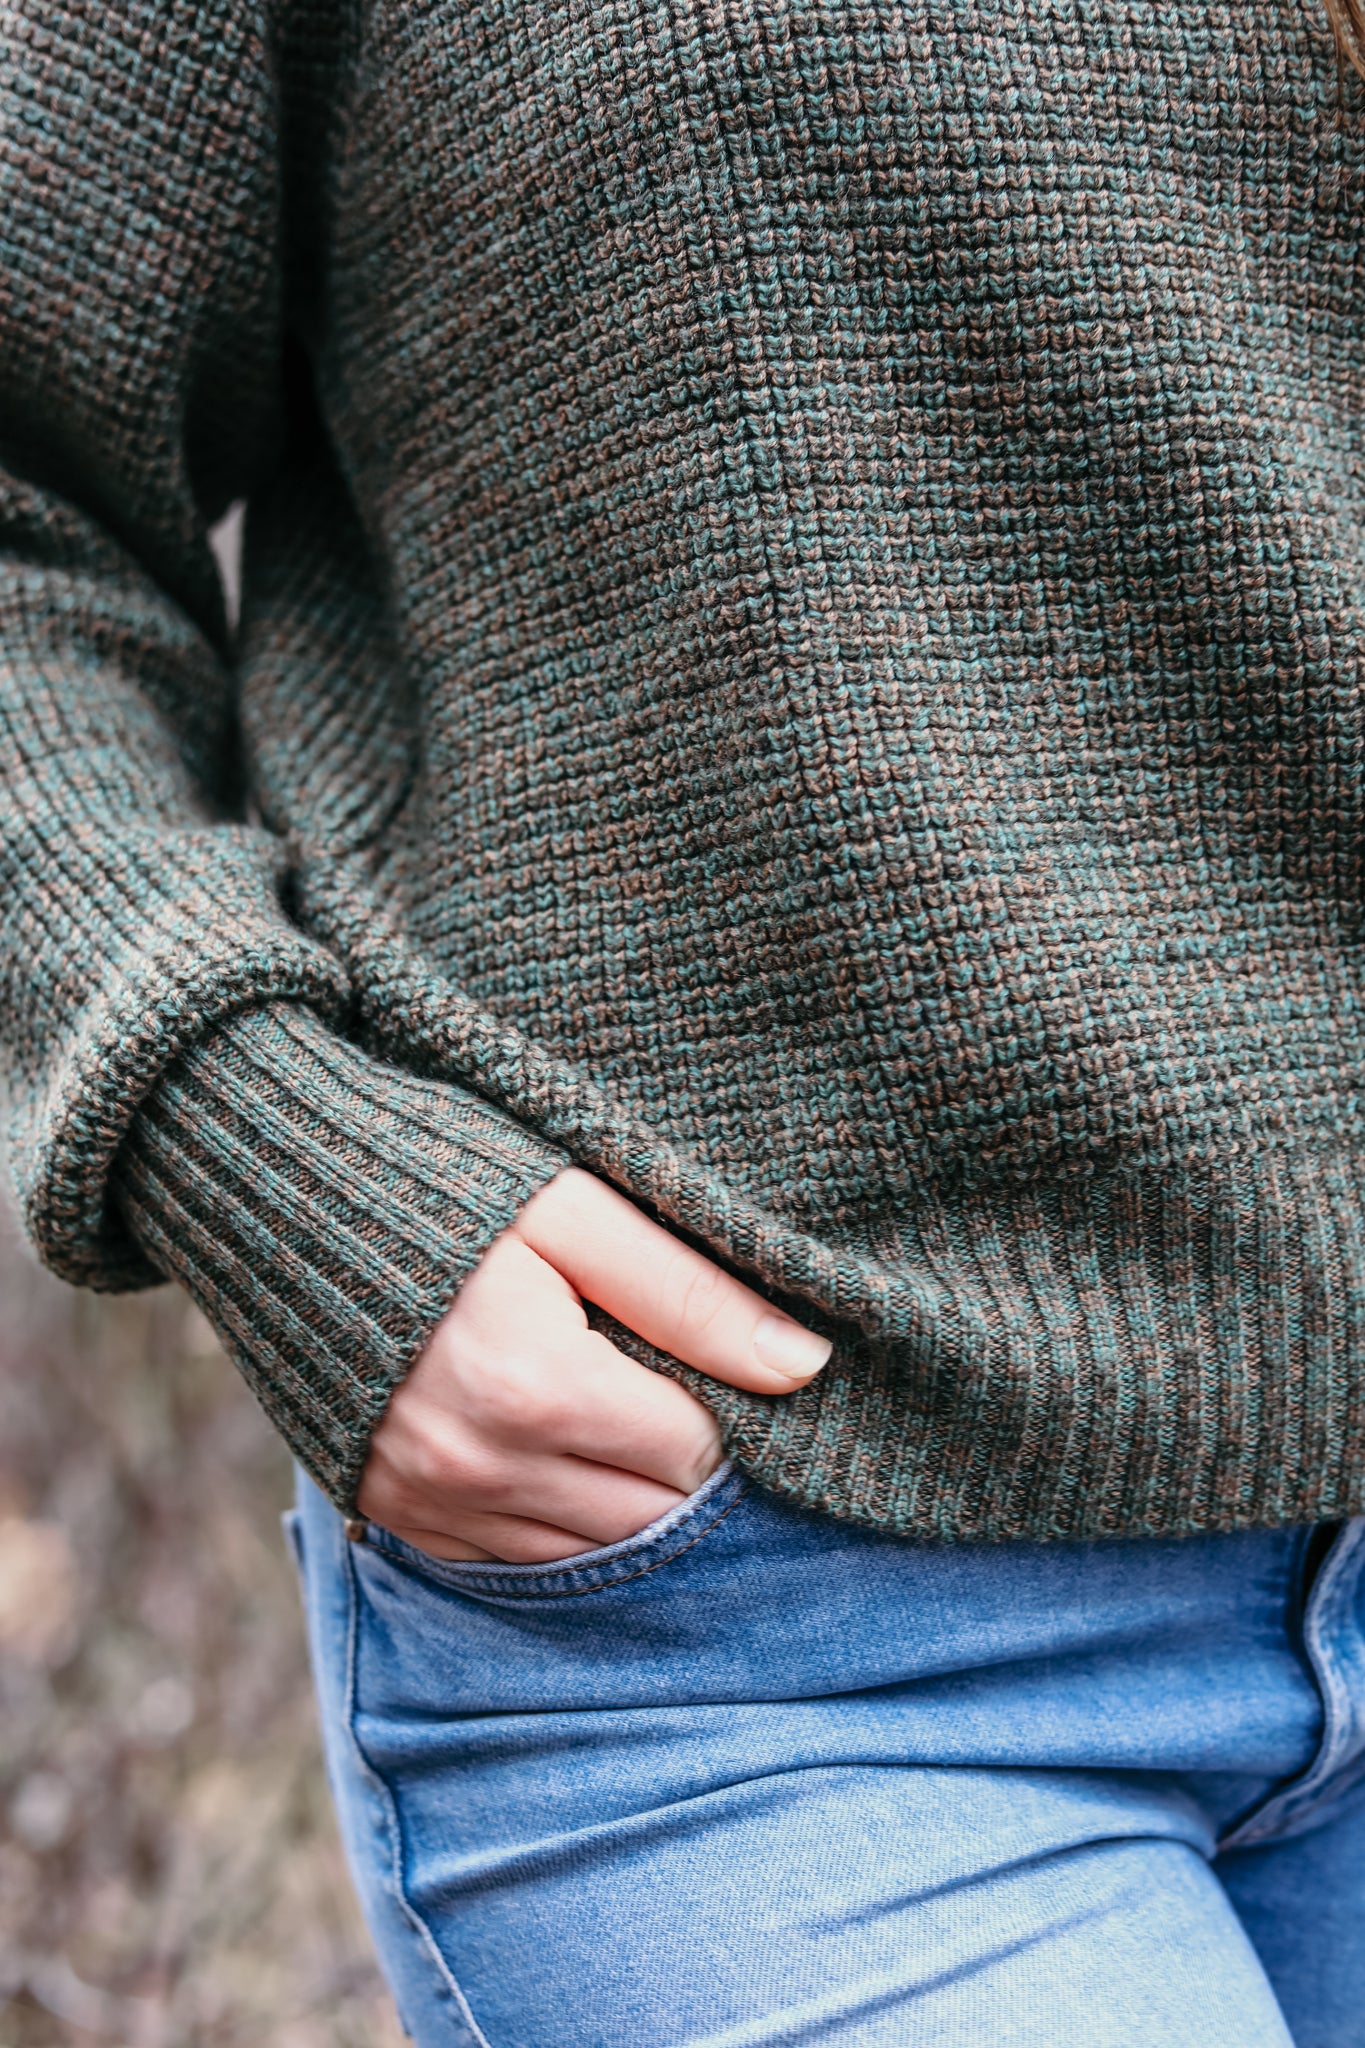 Darby Sweater